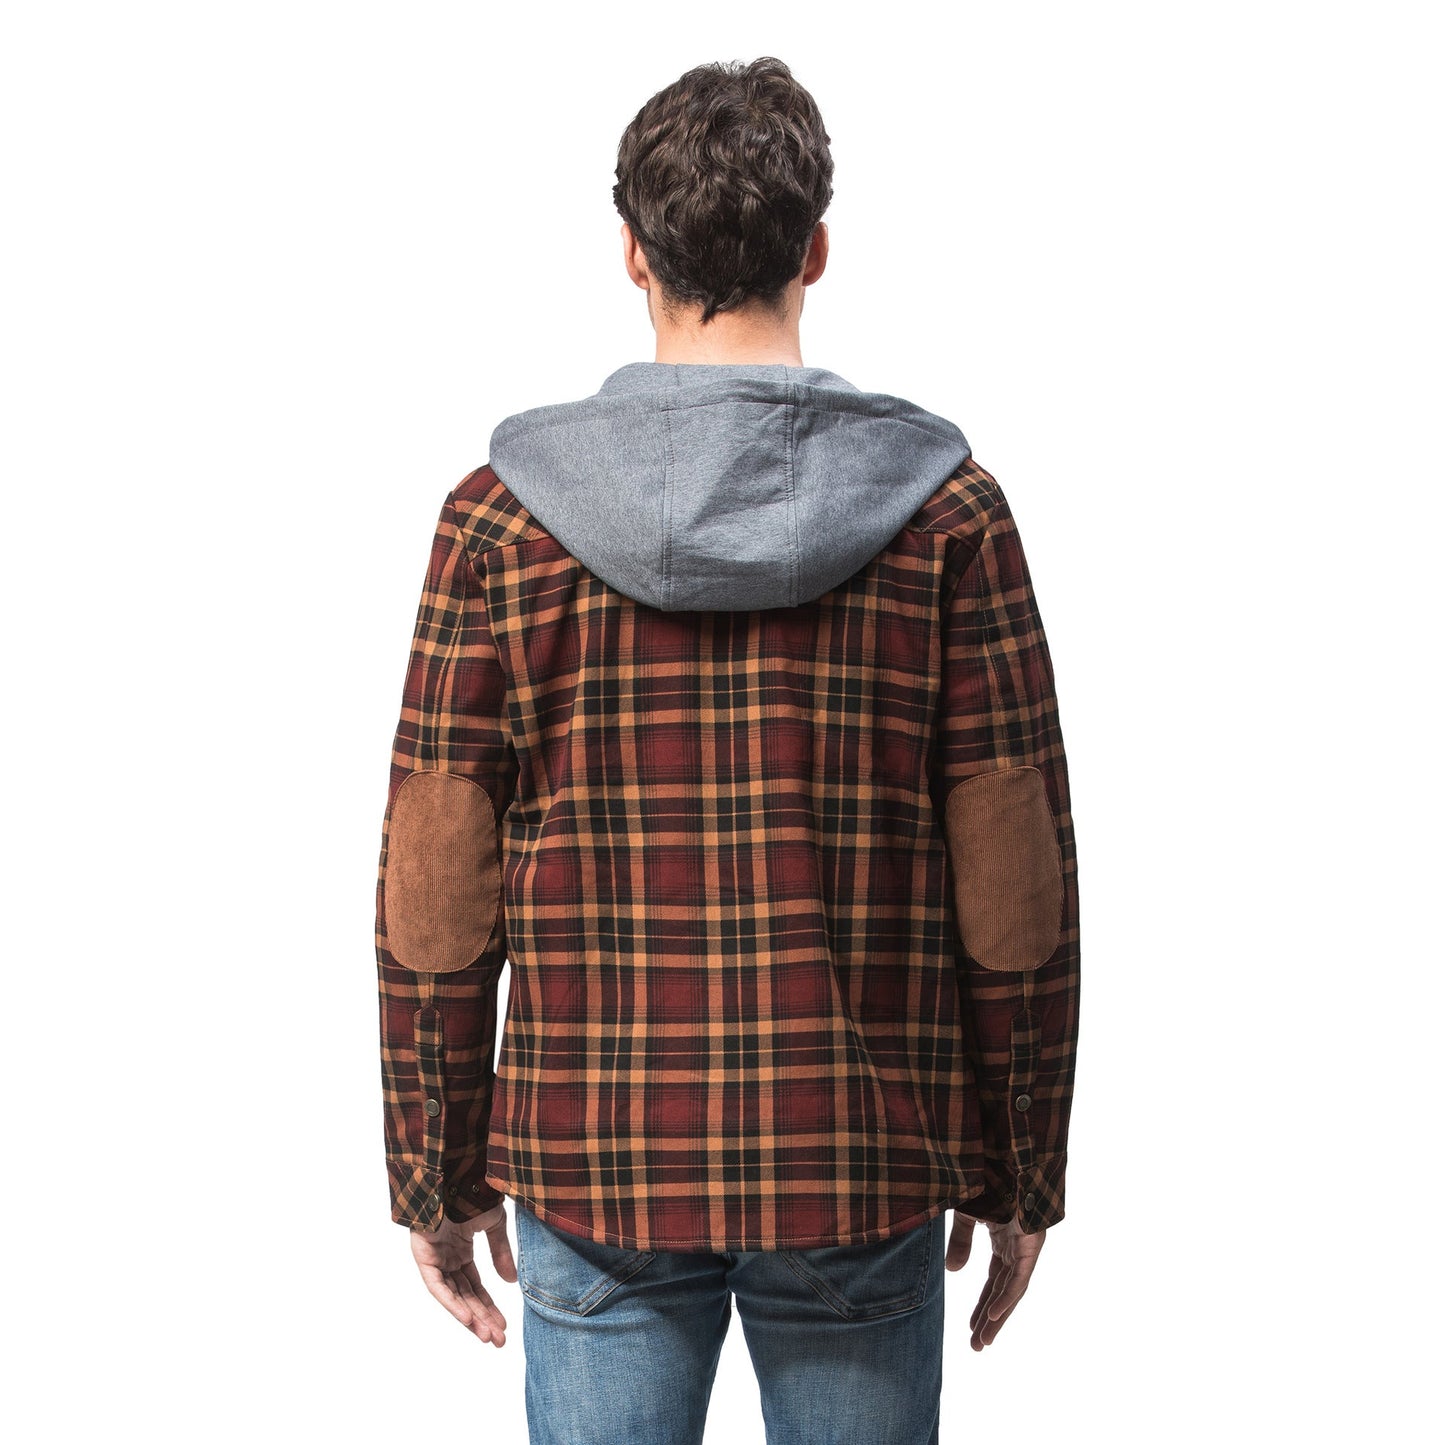 Men's Coat Jacket Casual Thicken Long Sleeve Plaid Shirt Jacket